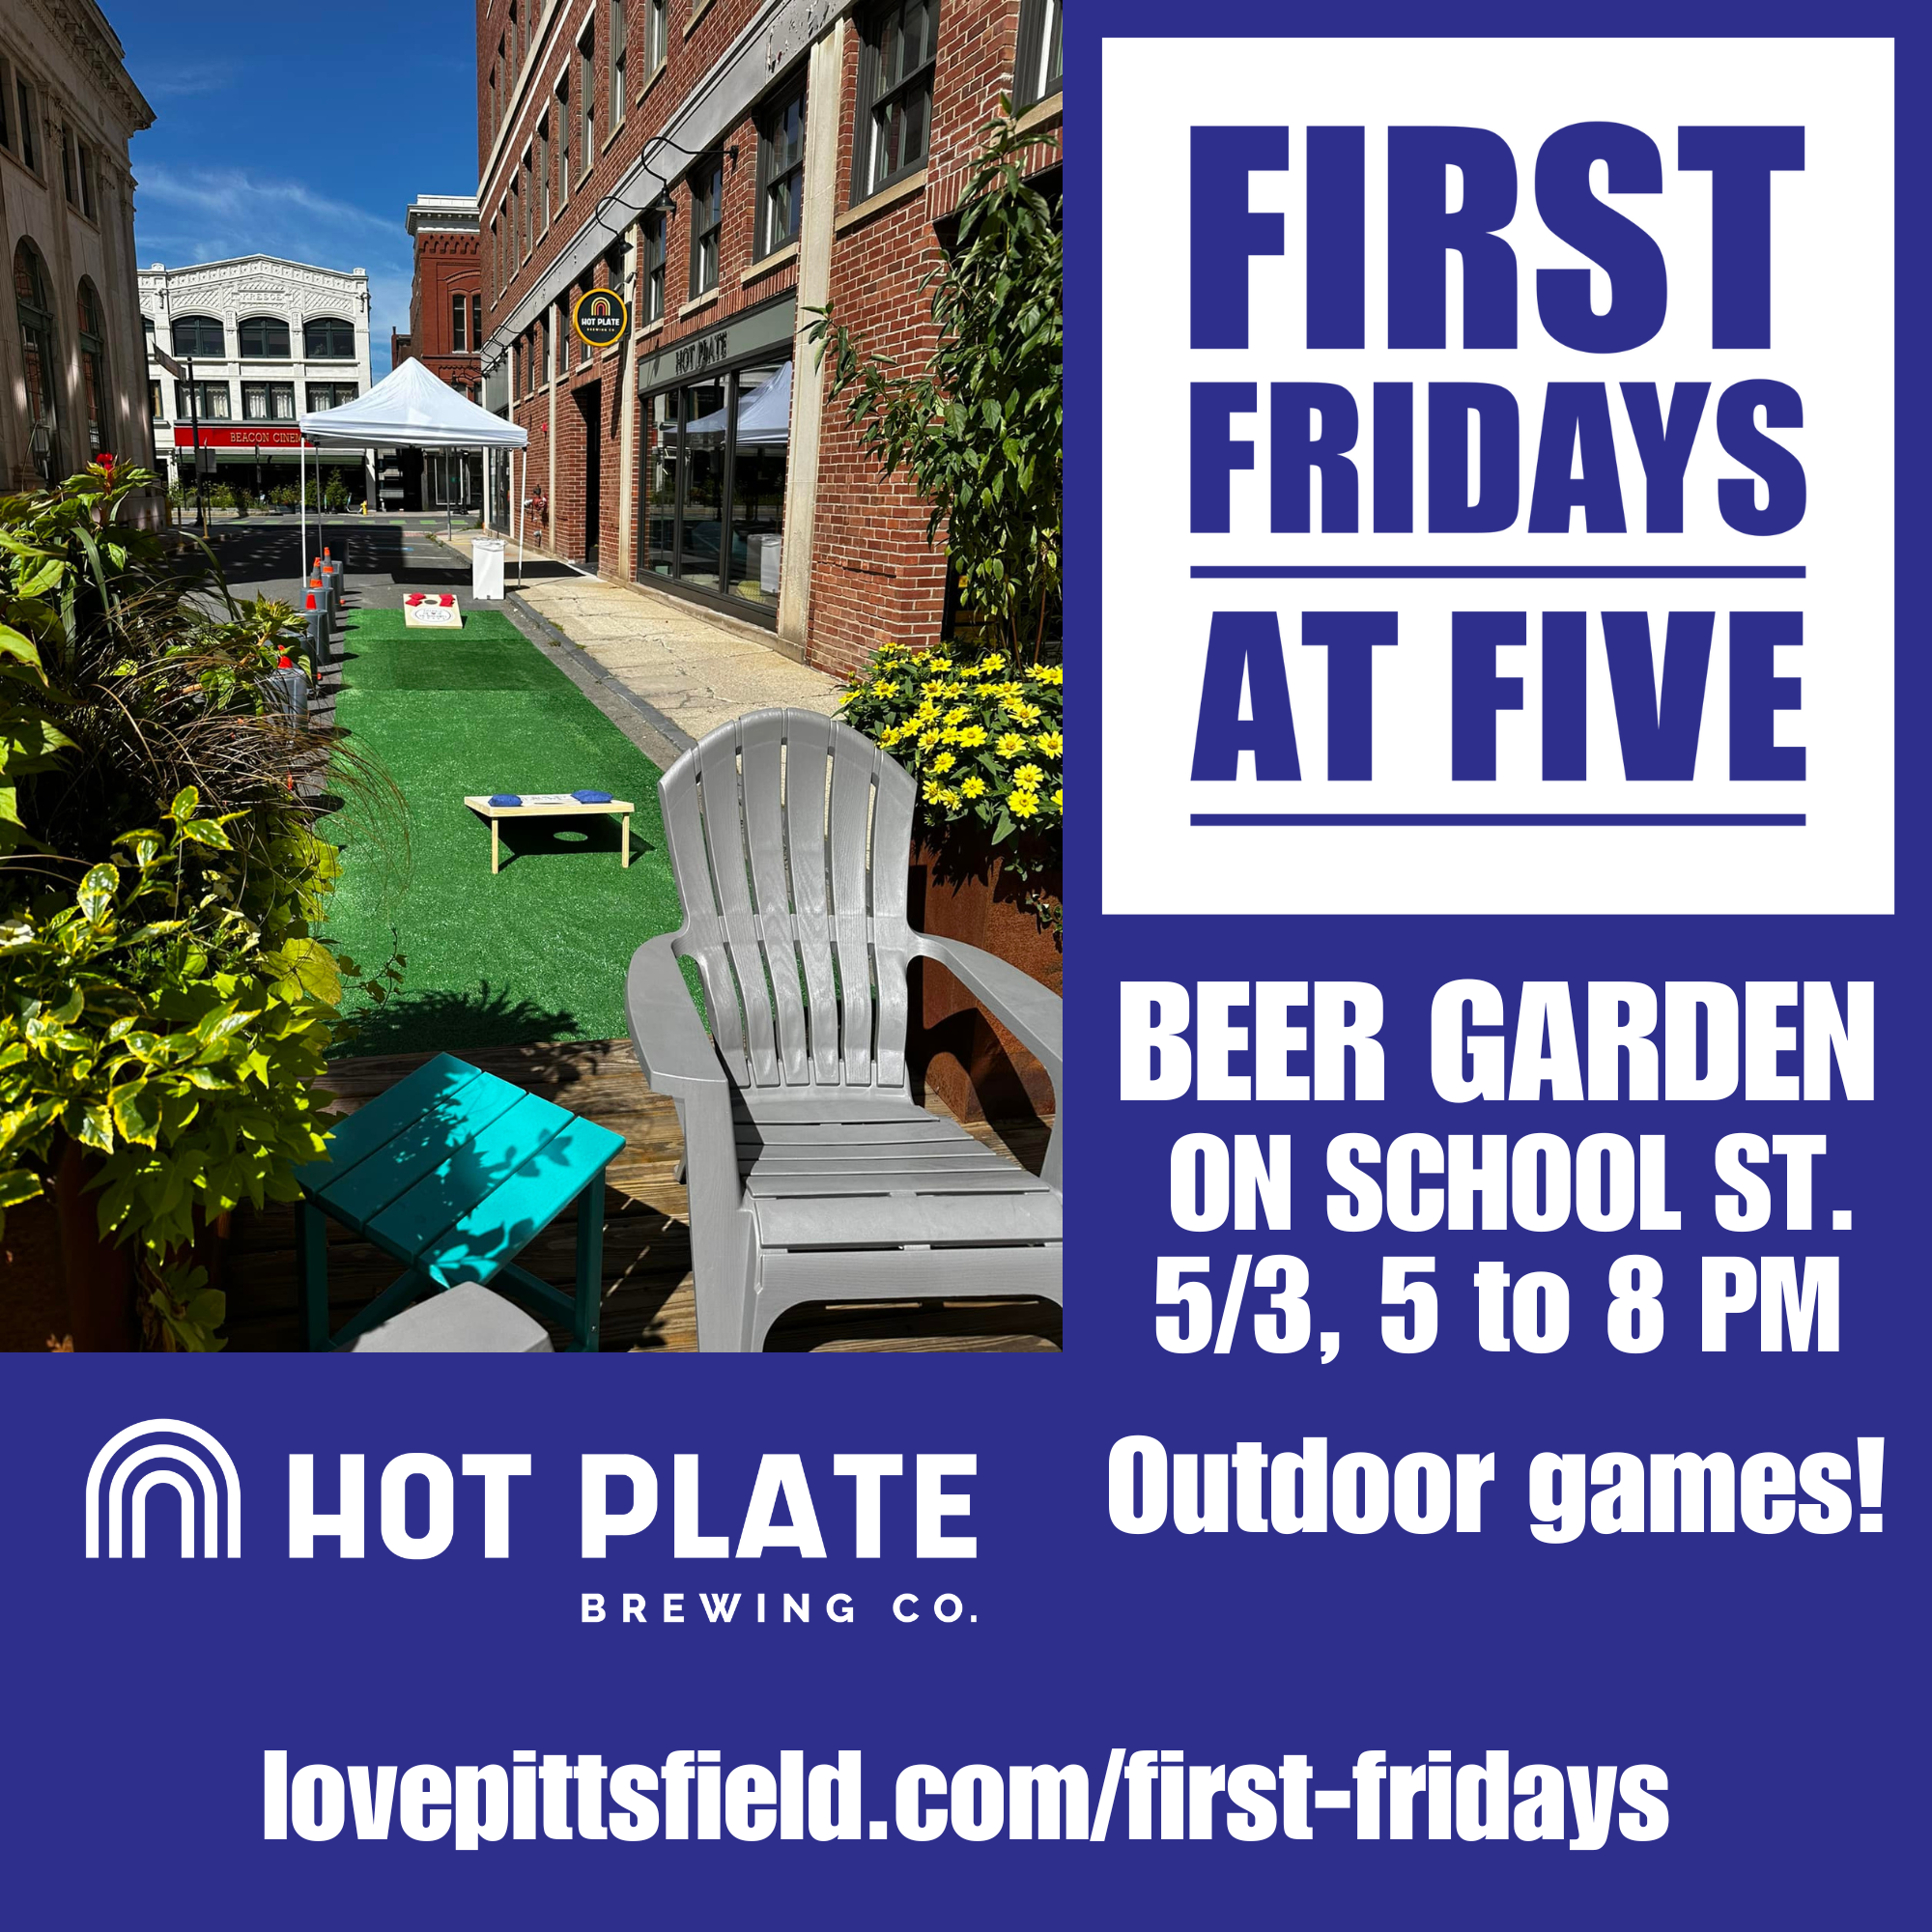 First Fridays at Five Beer Garden on School Street